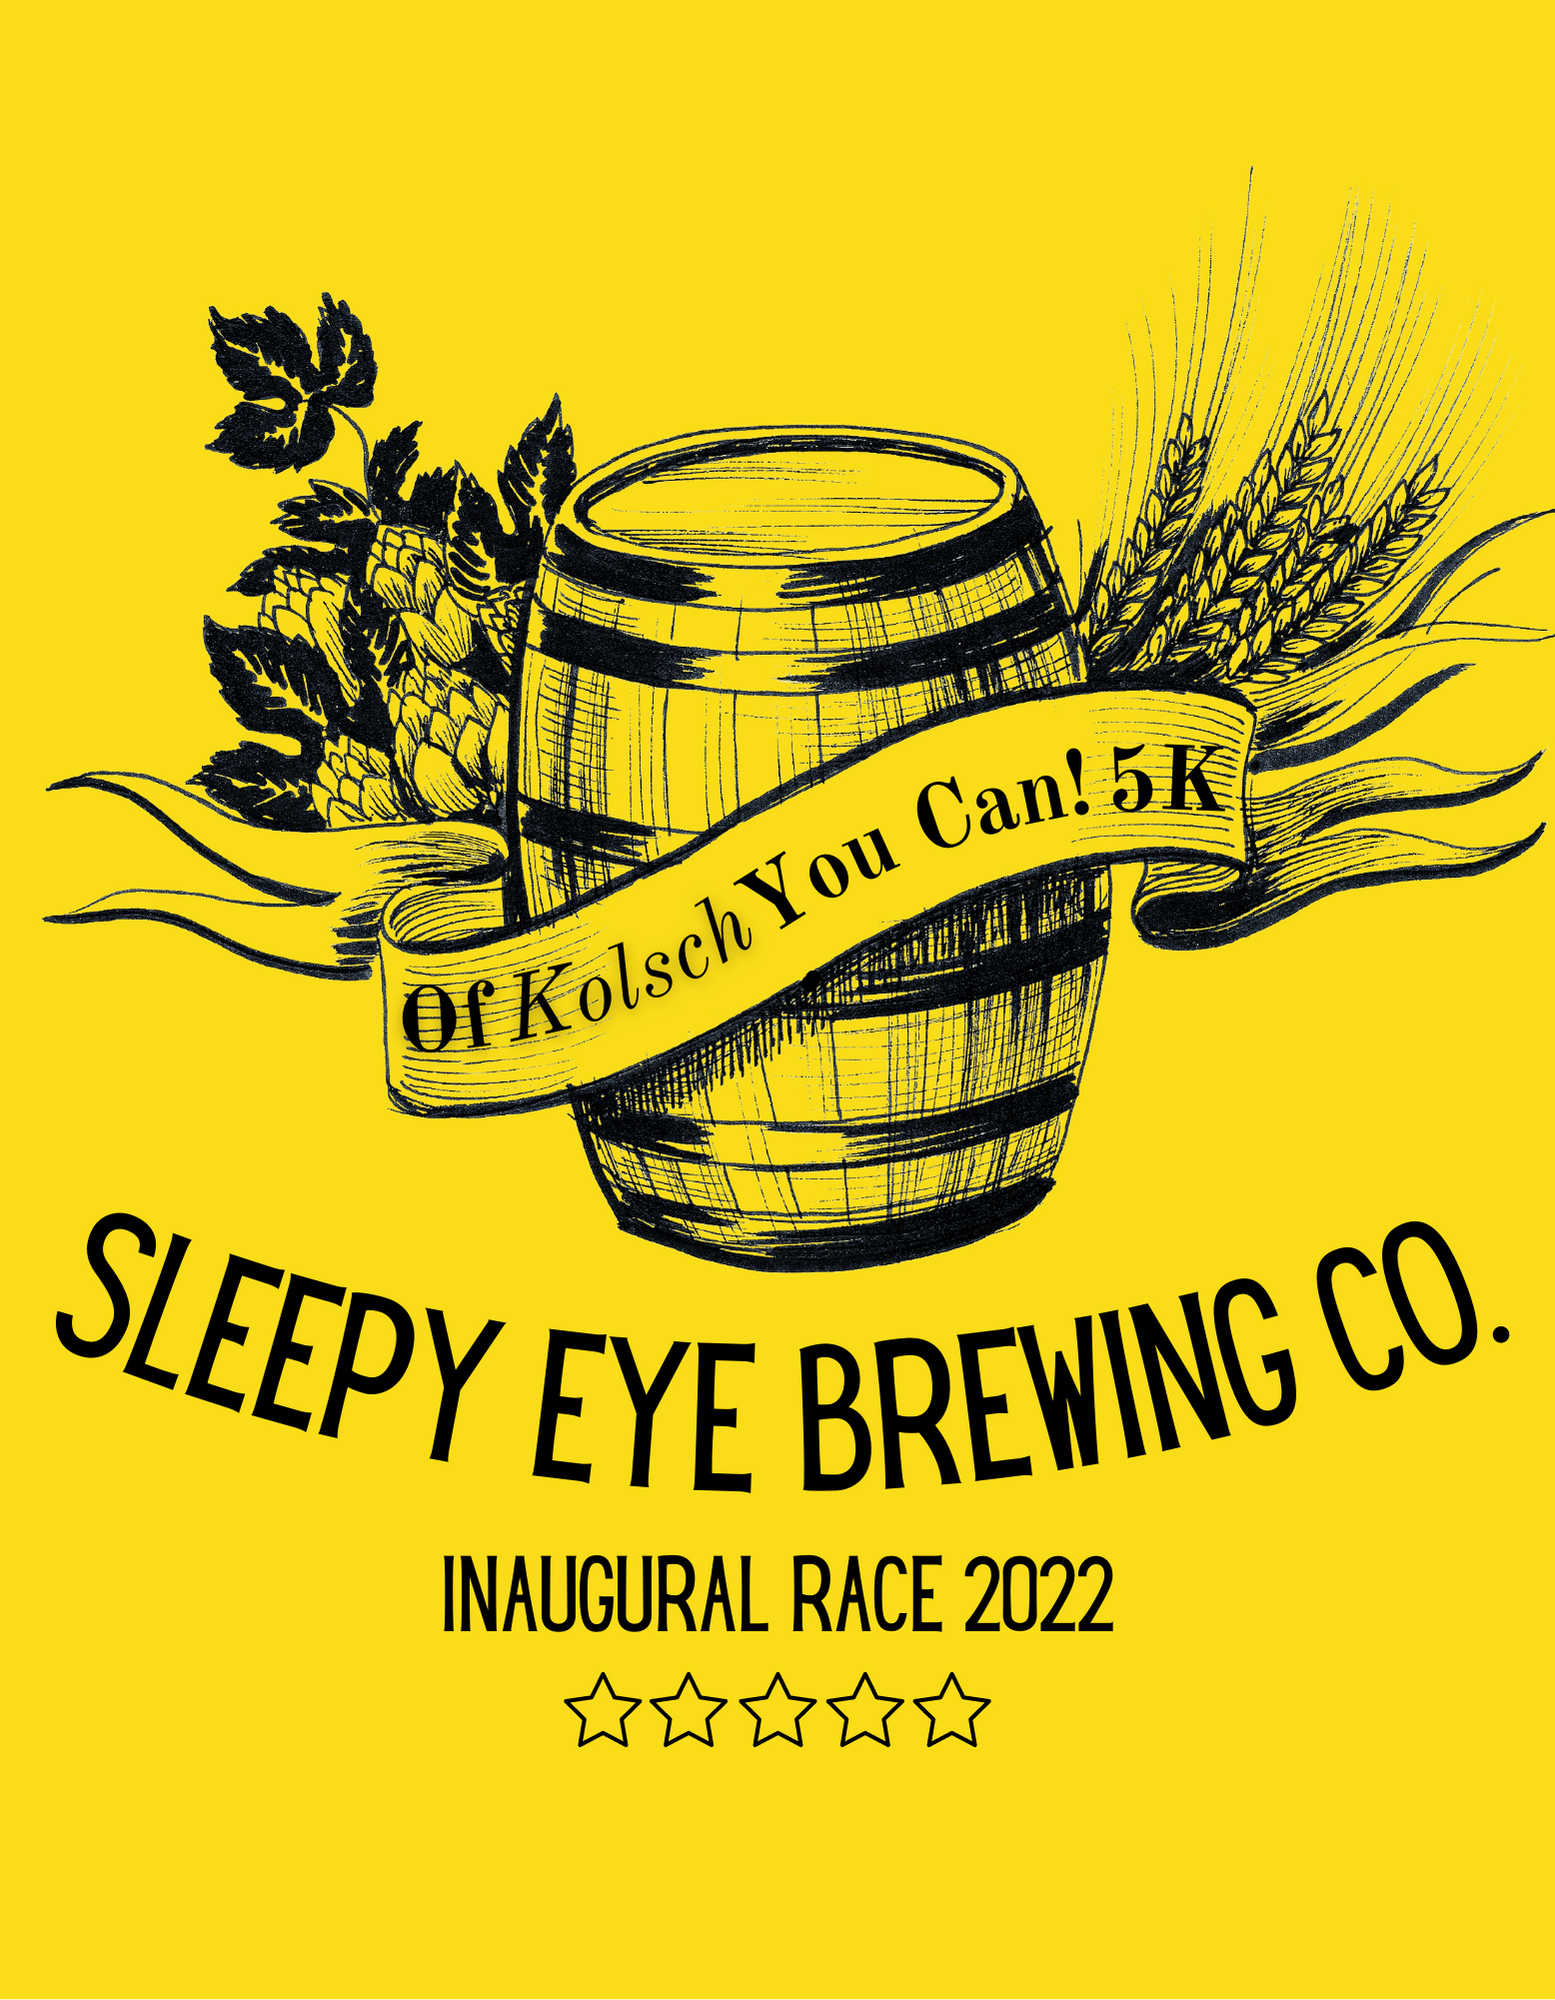 Sleepy Eye Brewing Of Kolsch You Can! 5K logo on RaceRaves